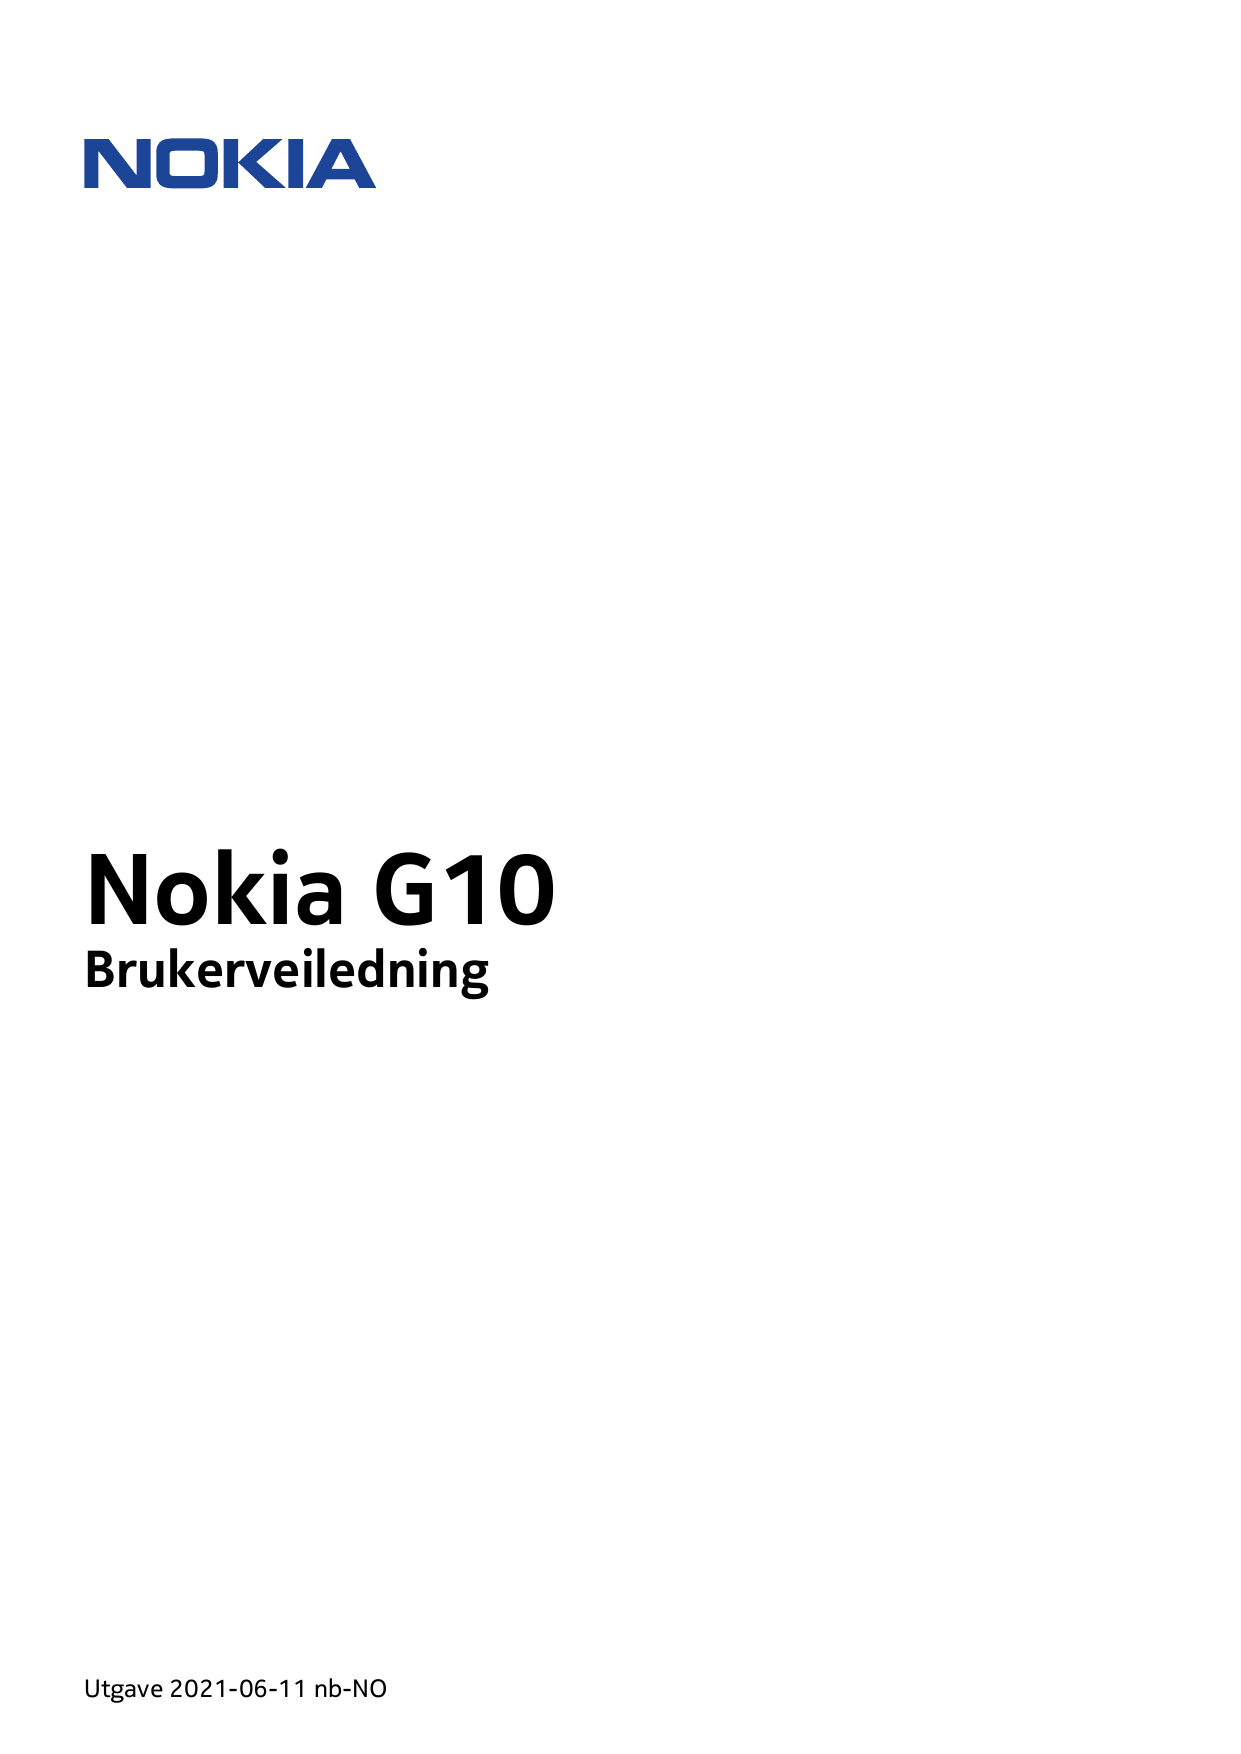 Nokia G10BrukerveiledningUtgave 2021-06-11 nb-NO